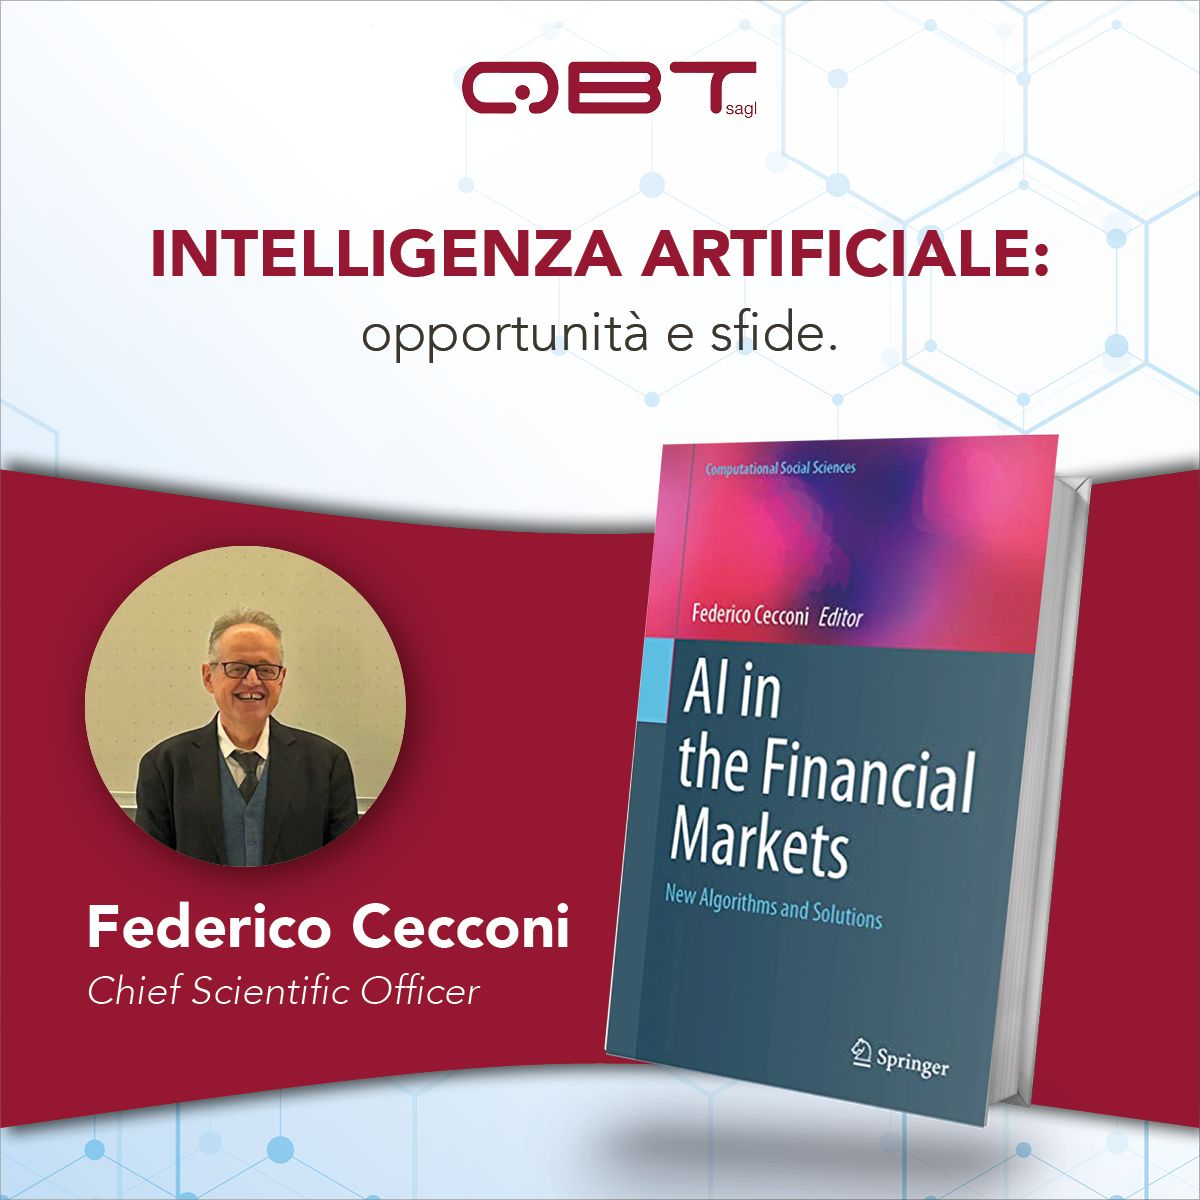 Nuovo libro Springer: "AI in the Financial Markets" 